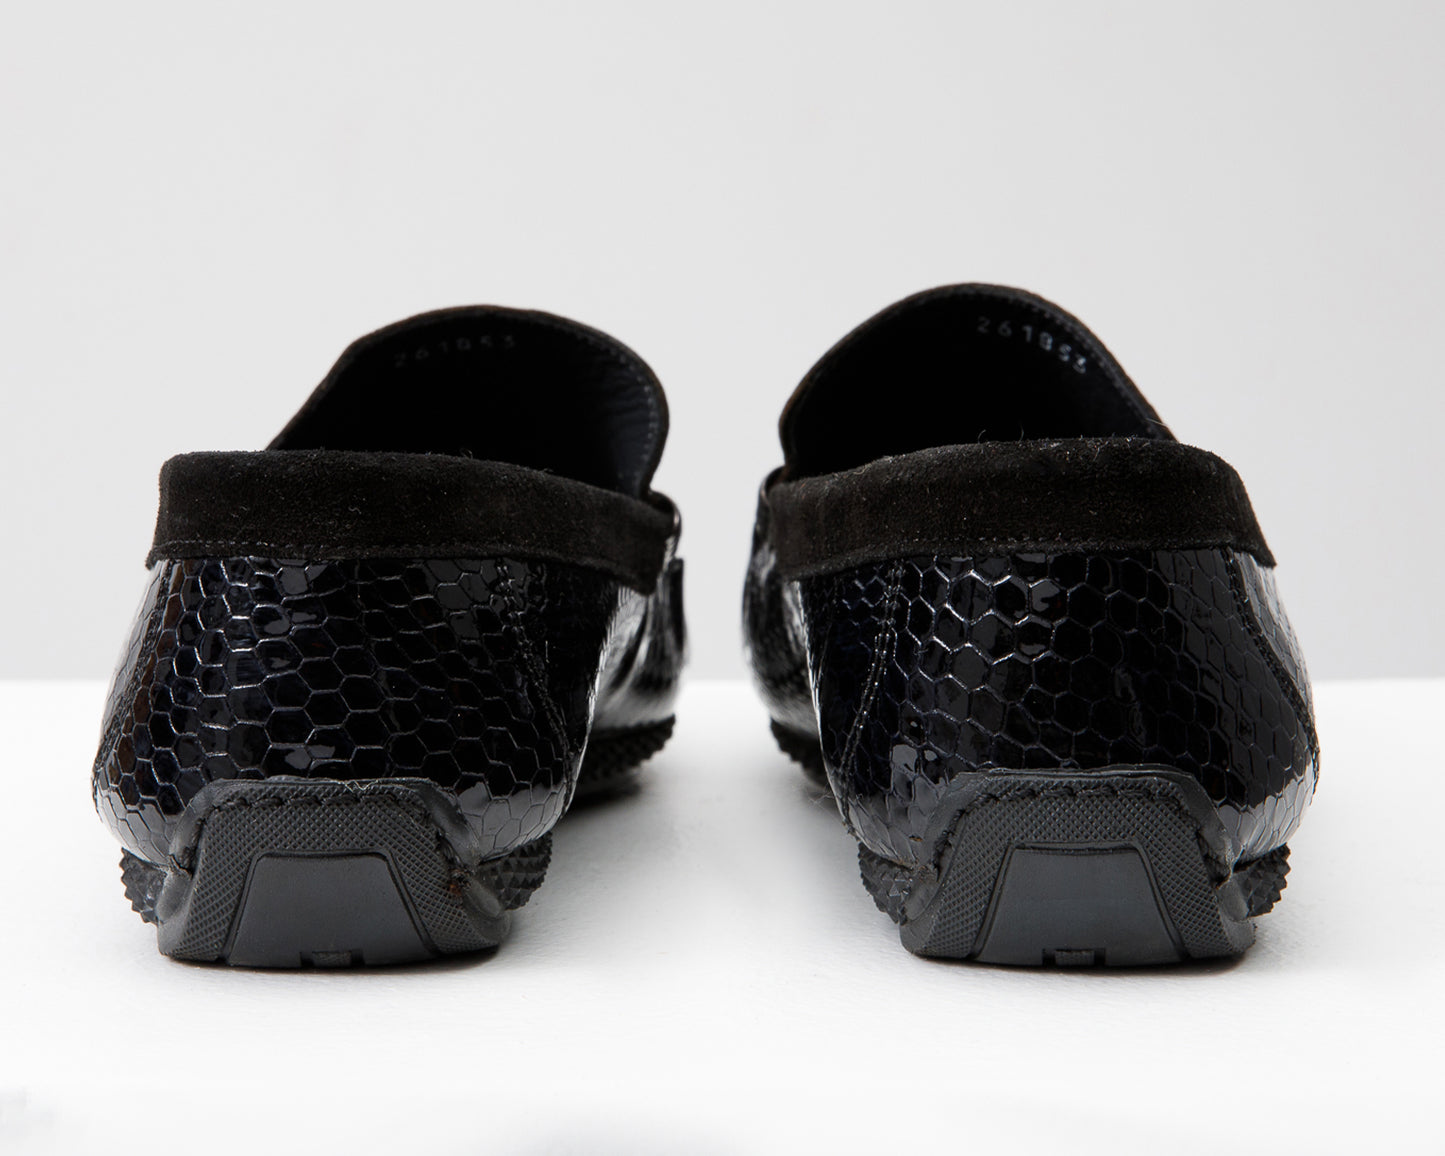 The Cordova Black Patent Leather Tassel Loafer Men Shoe